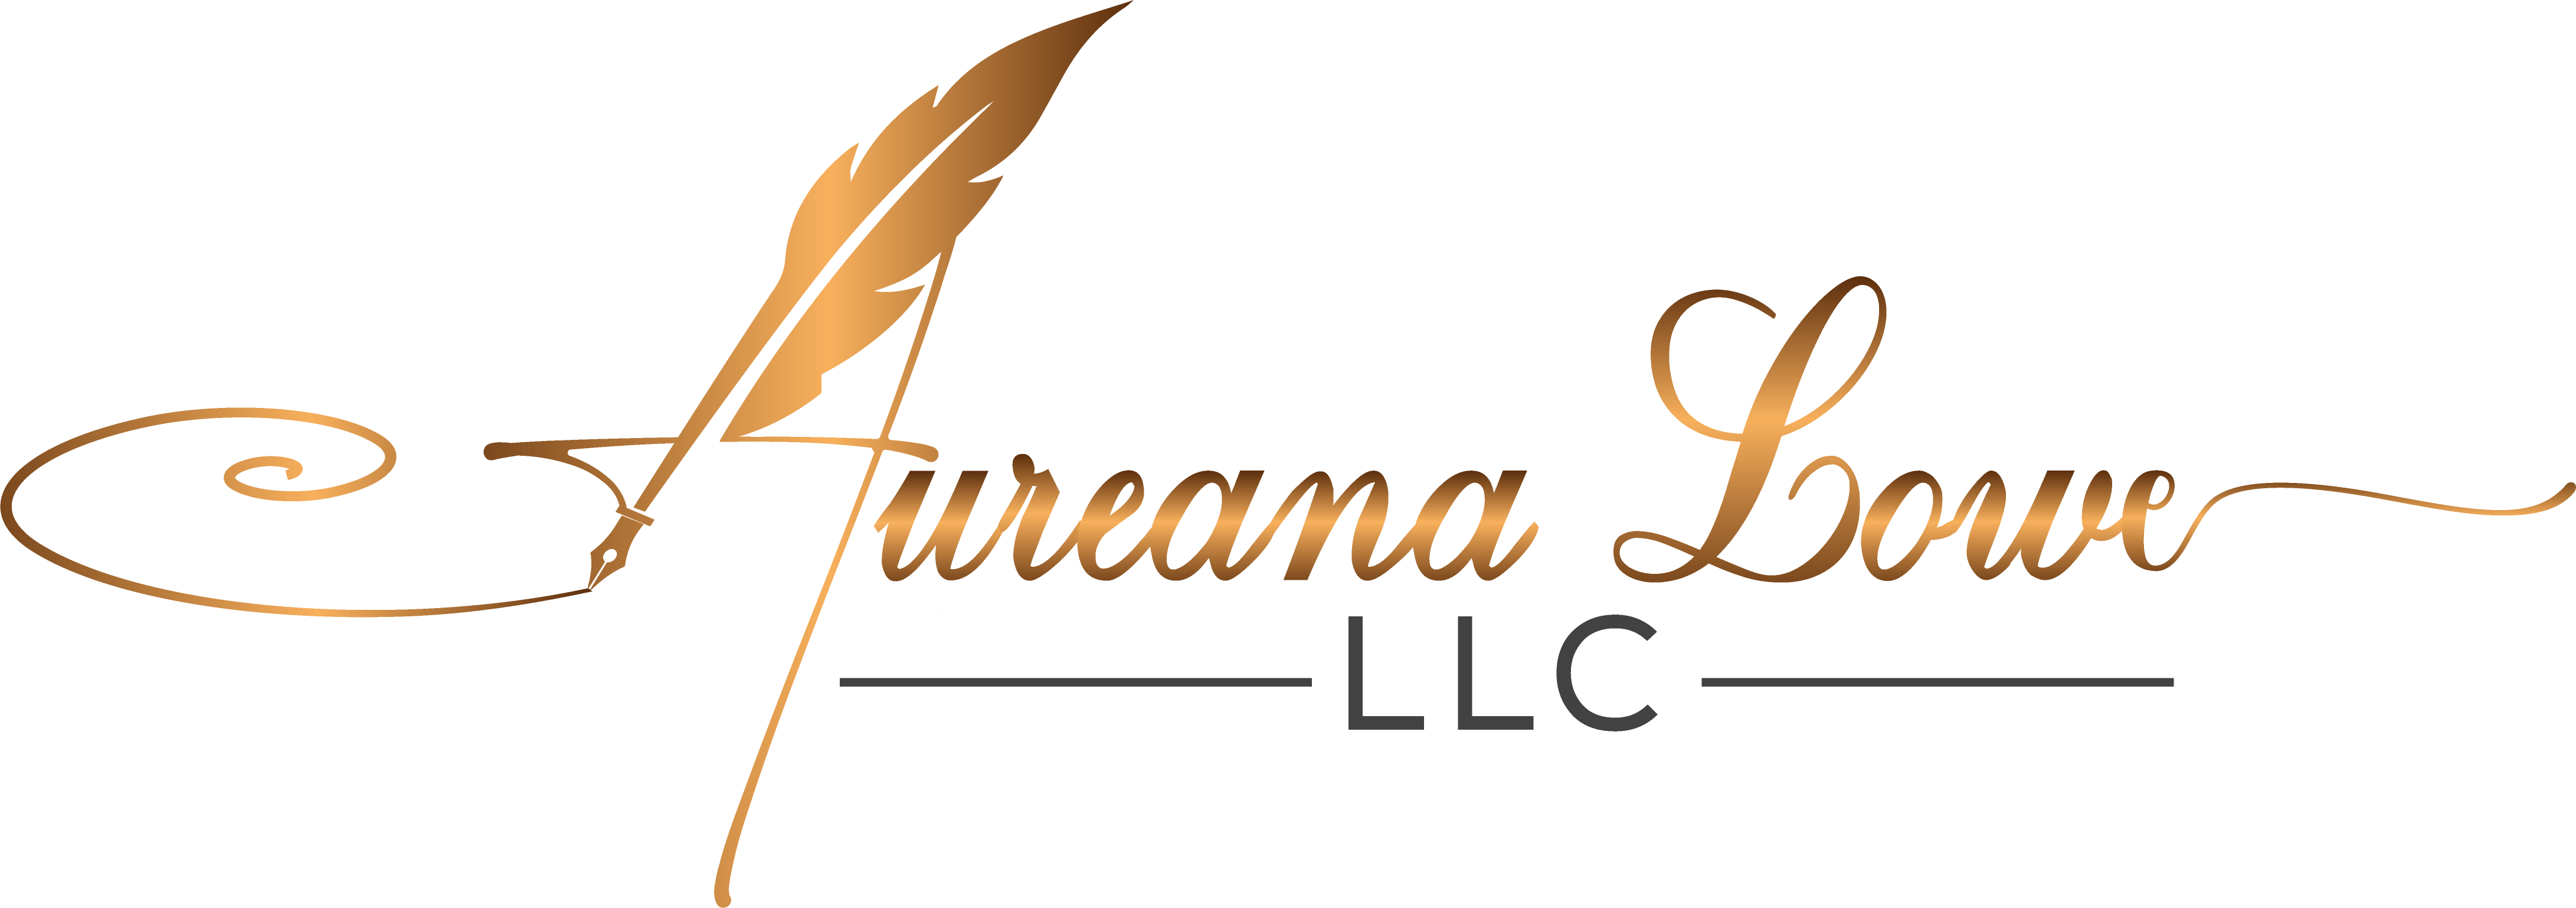 Aureana Lowe, LLC